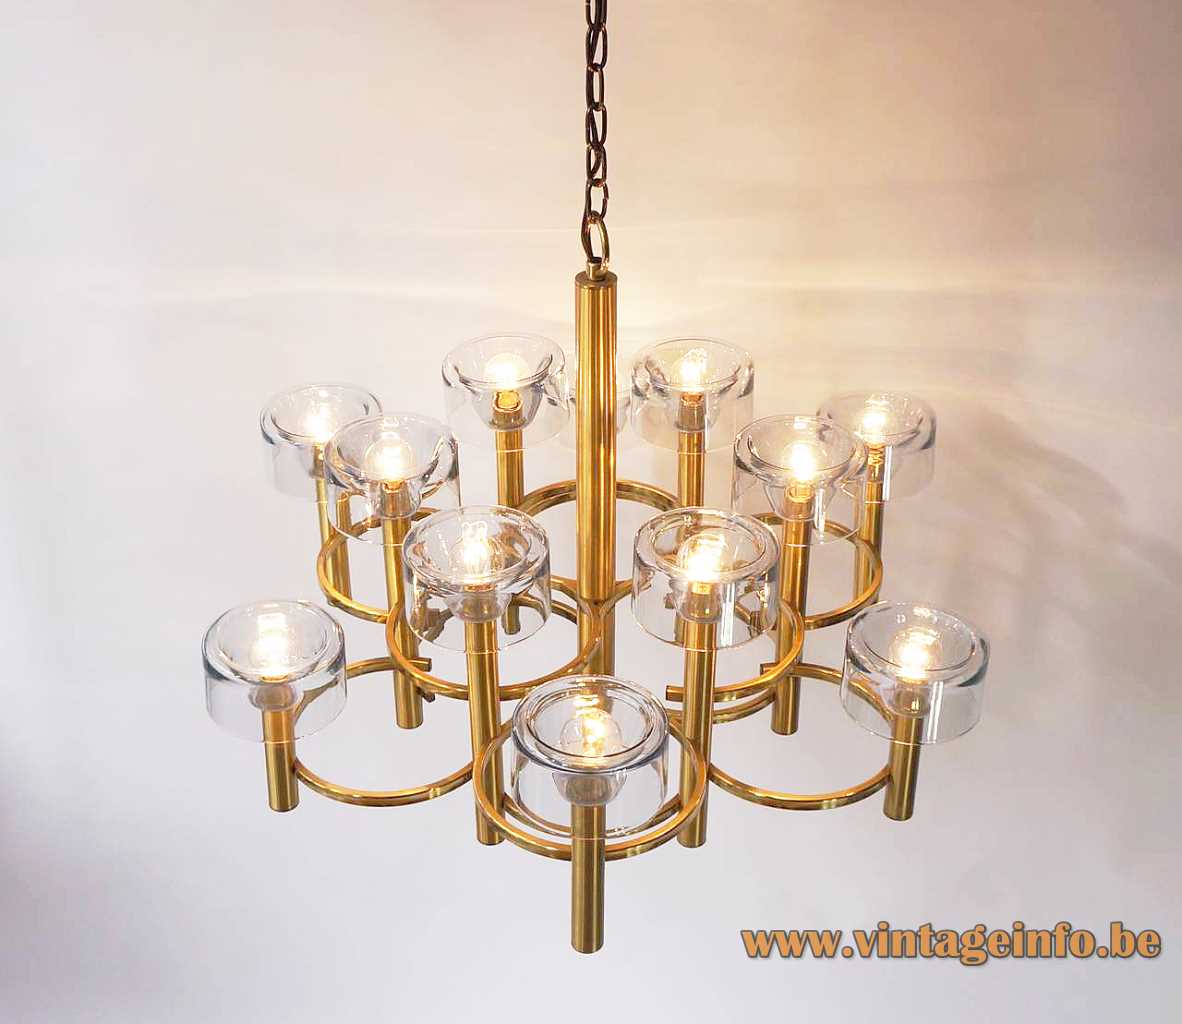 Gaetano Sciolari Olimpic chandelier brass tubes curved rods round glass lampshades 1970s Italy design